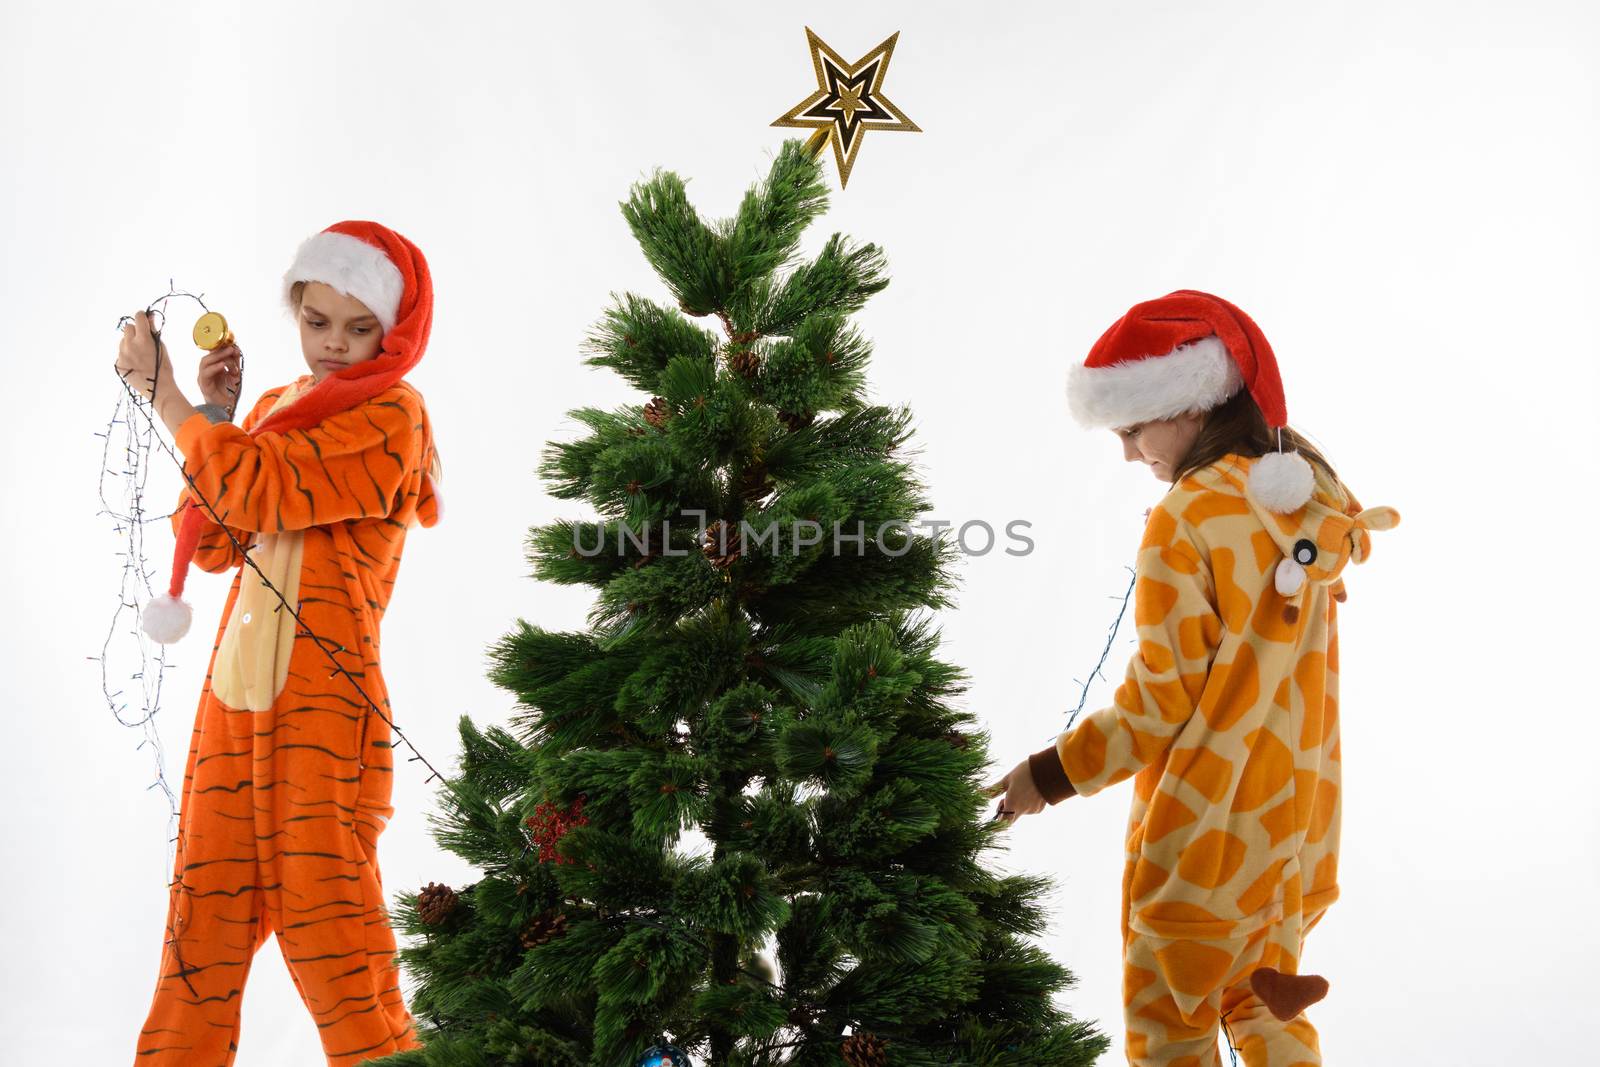 Girls remove the luminous garland from the Christmas tree